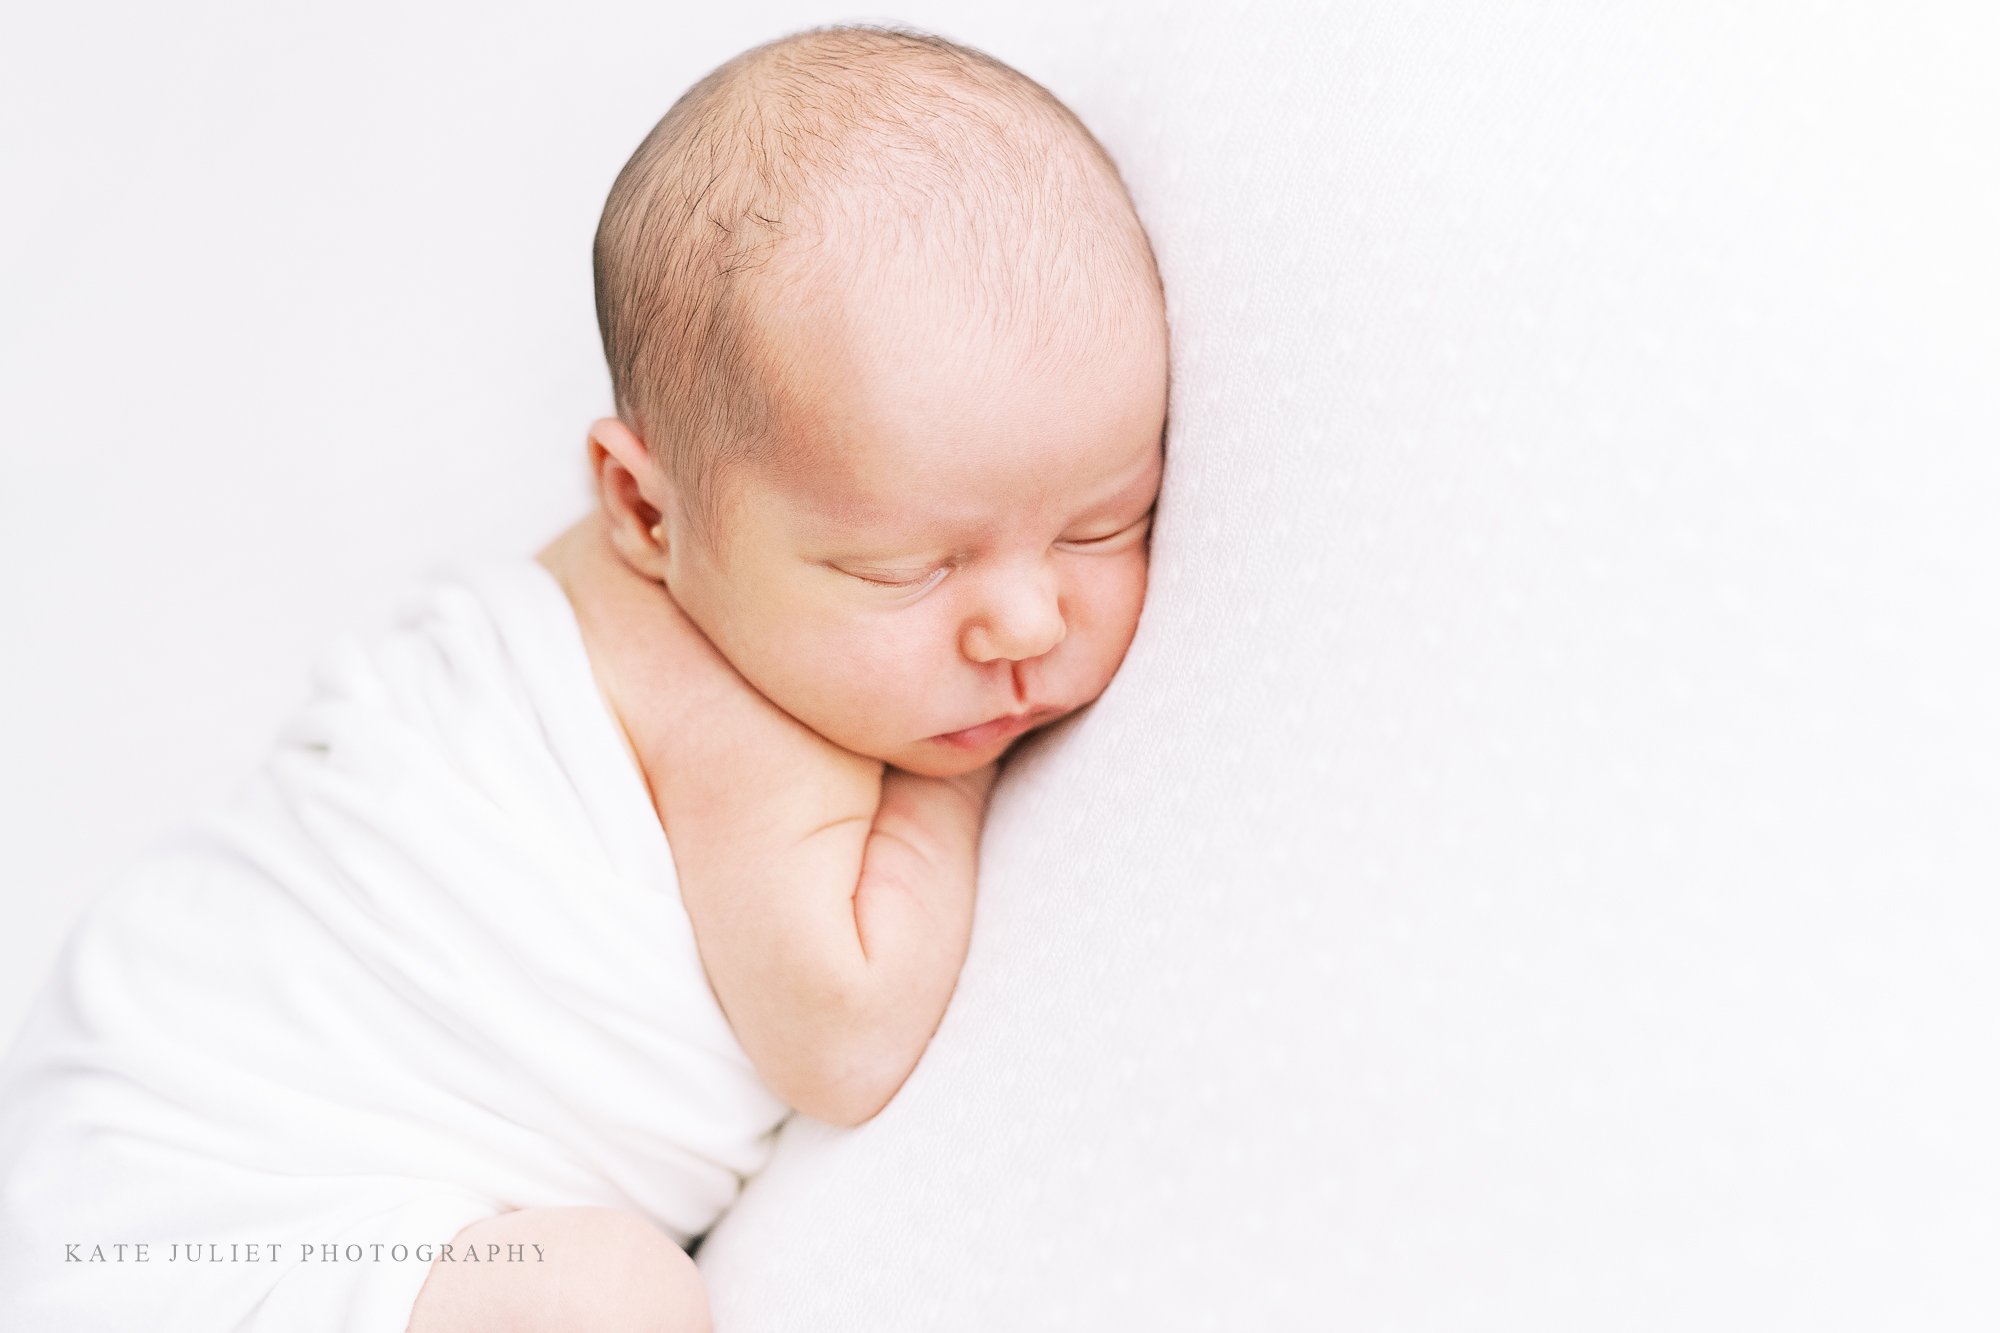 kate-juliet-photography-newborn-web-185.jpg